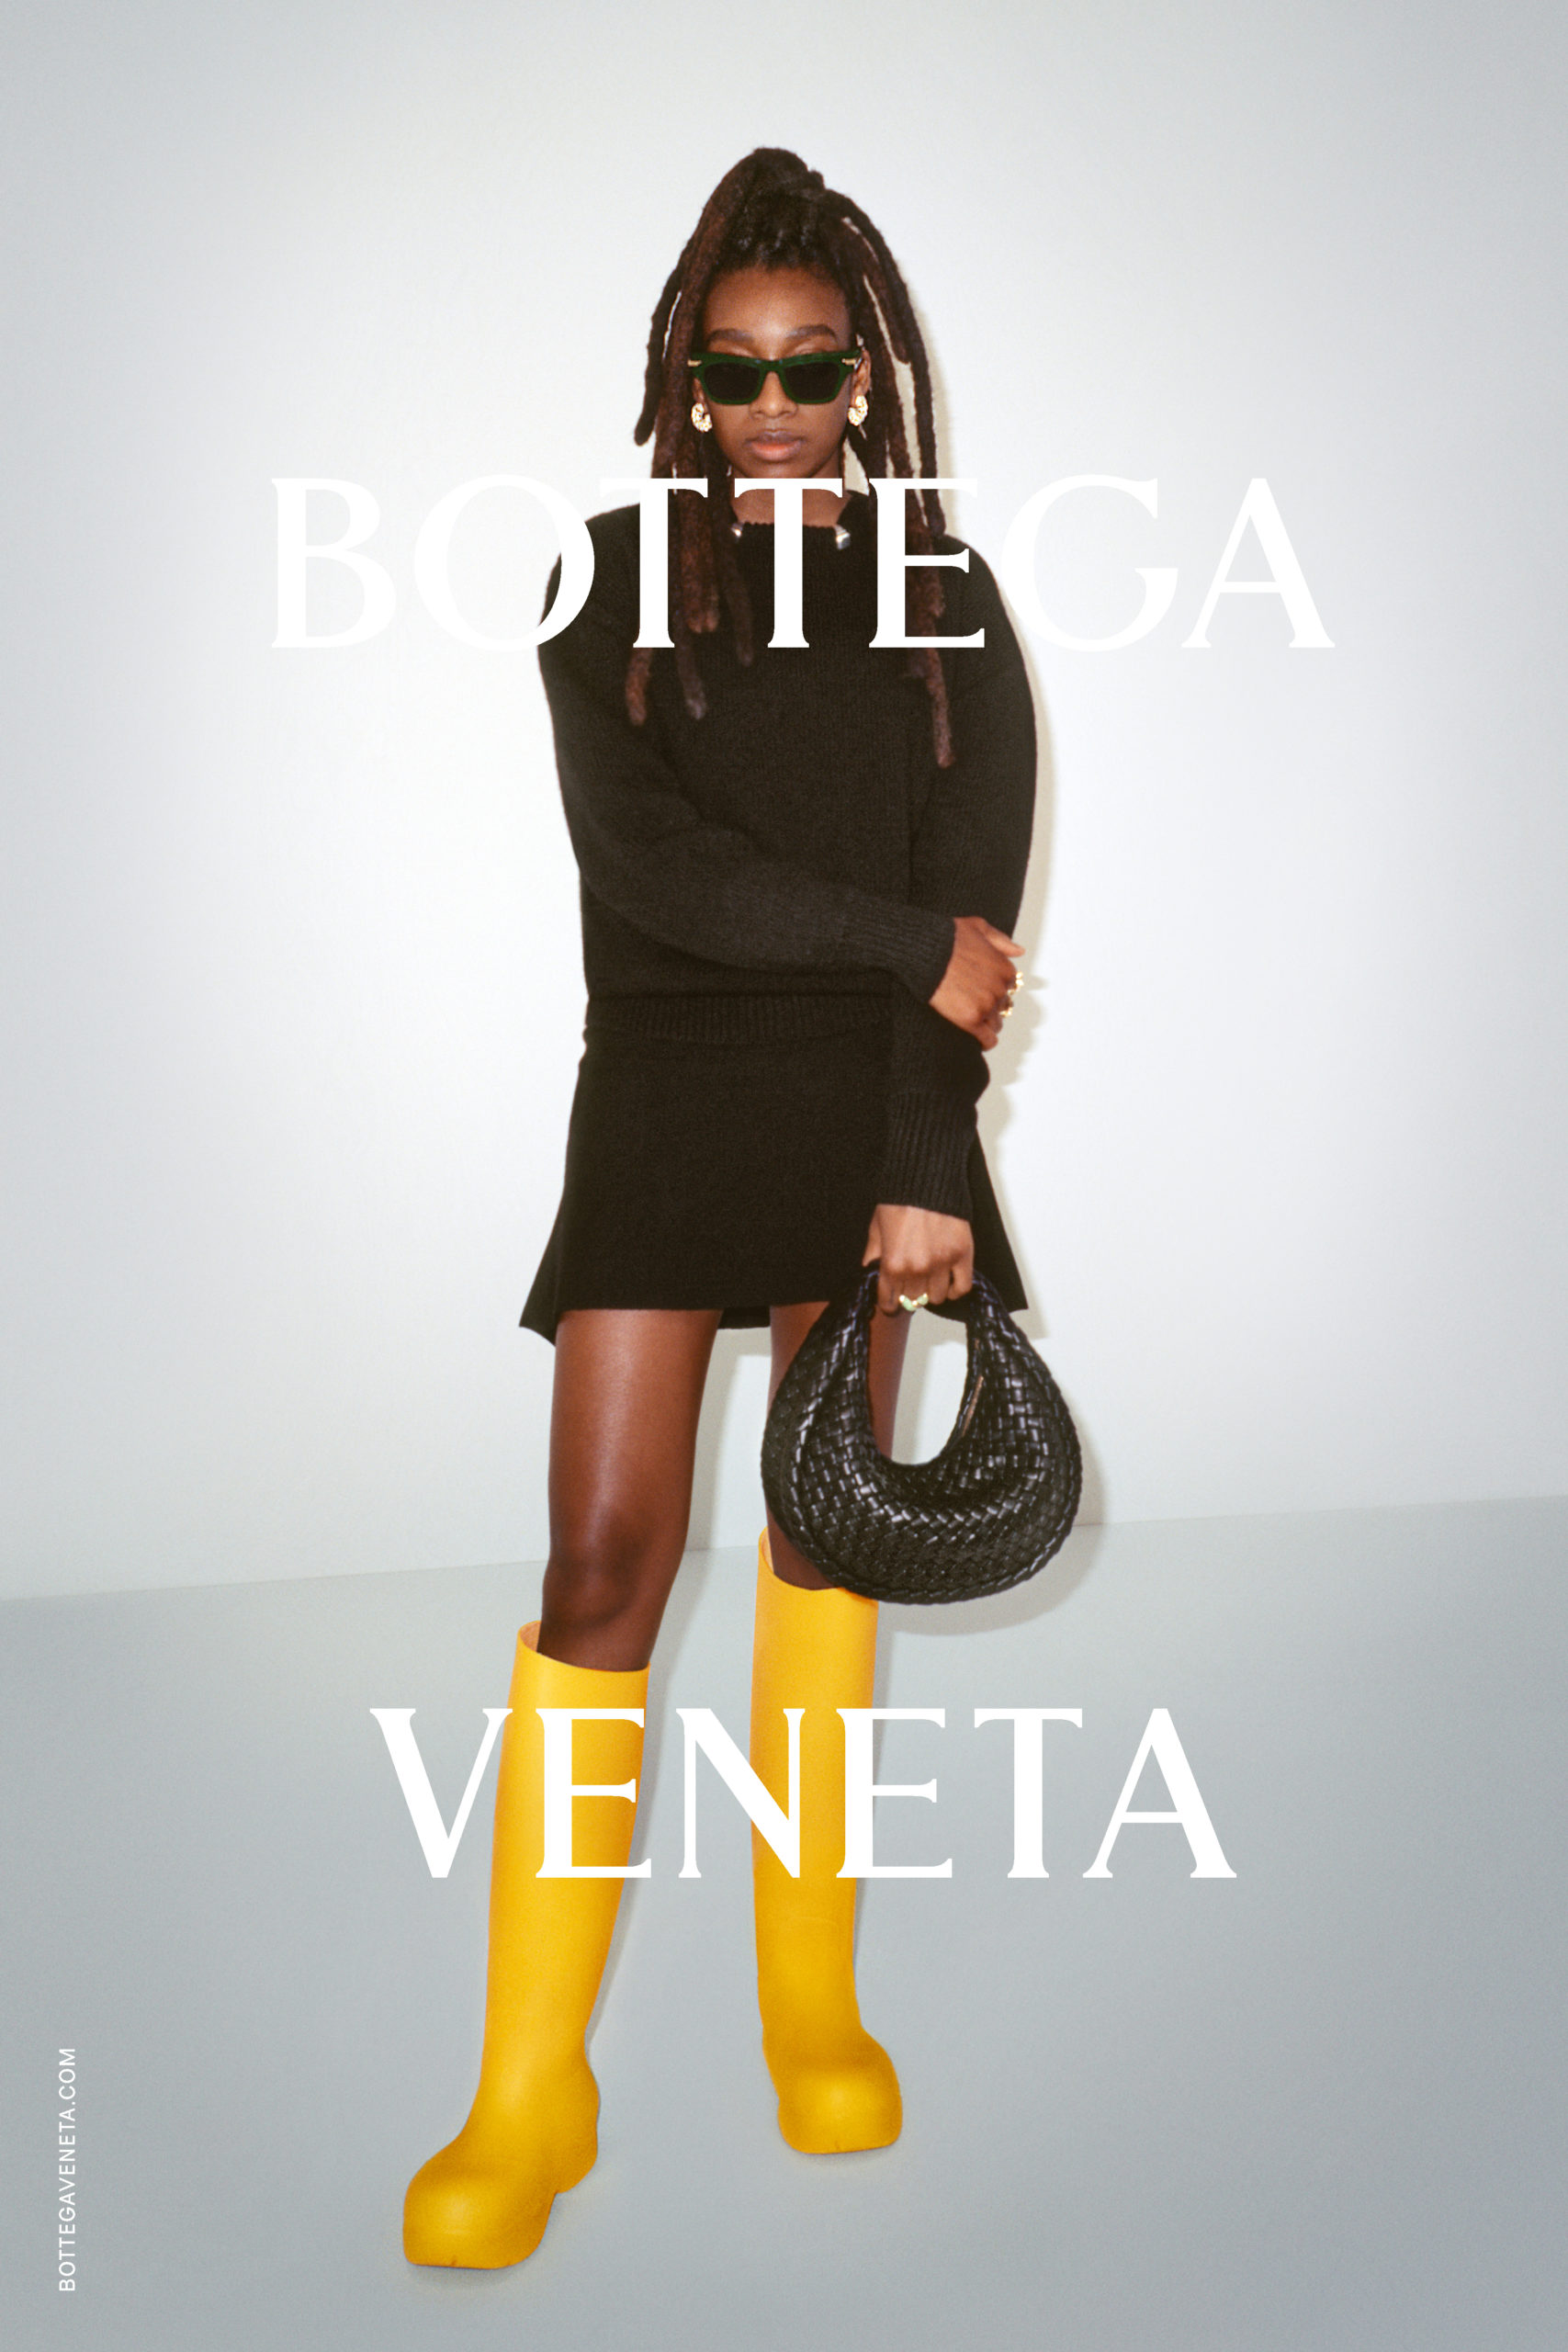 6 Celebrities Who Love Bottega Veneta